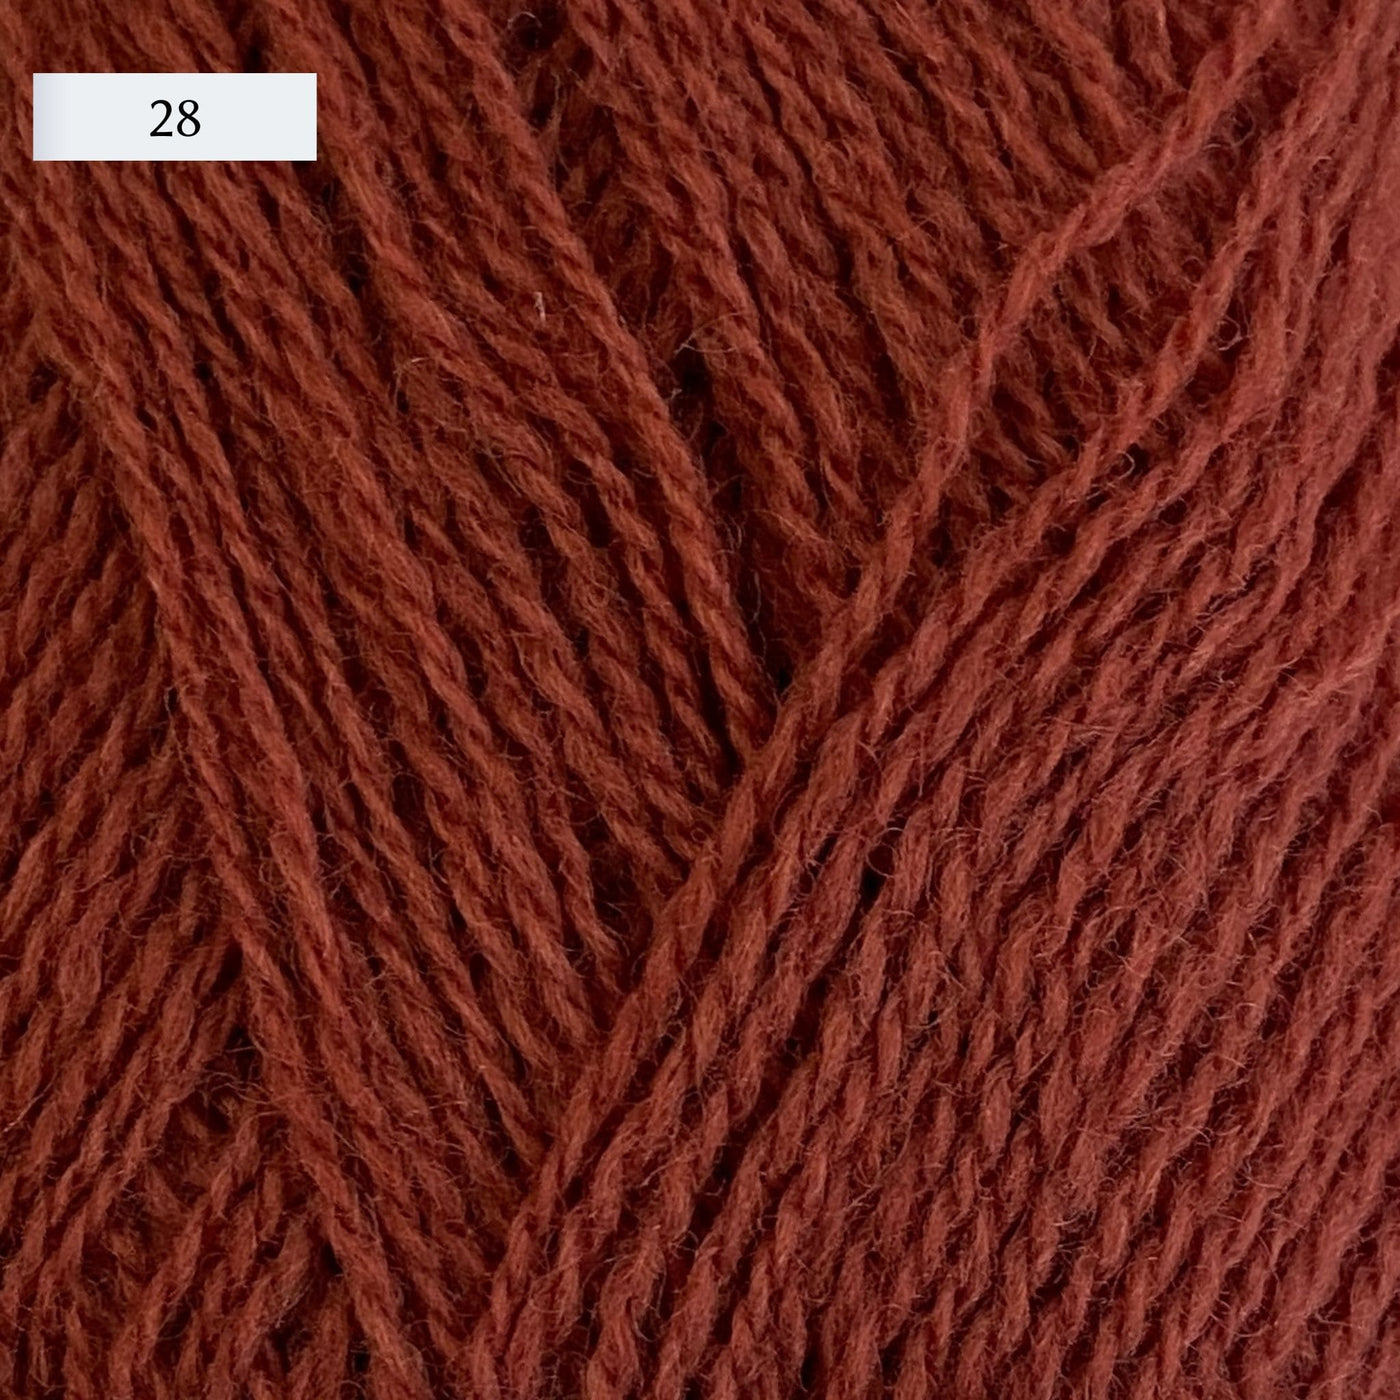 Rauma Lamullgarn, a fingering weight yarn, in color 28, a medium russet red